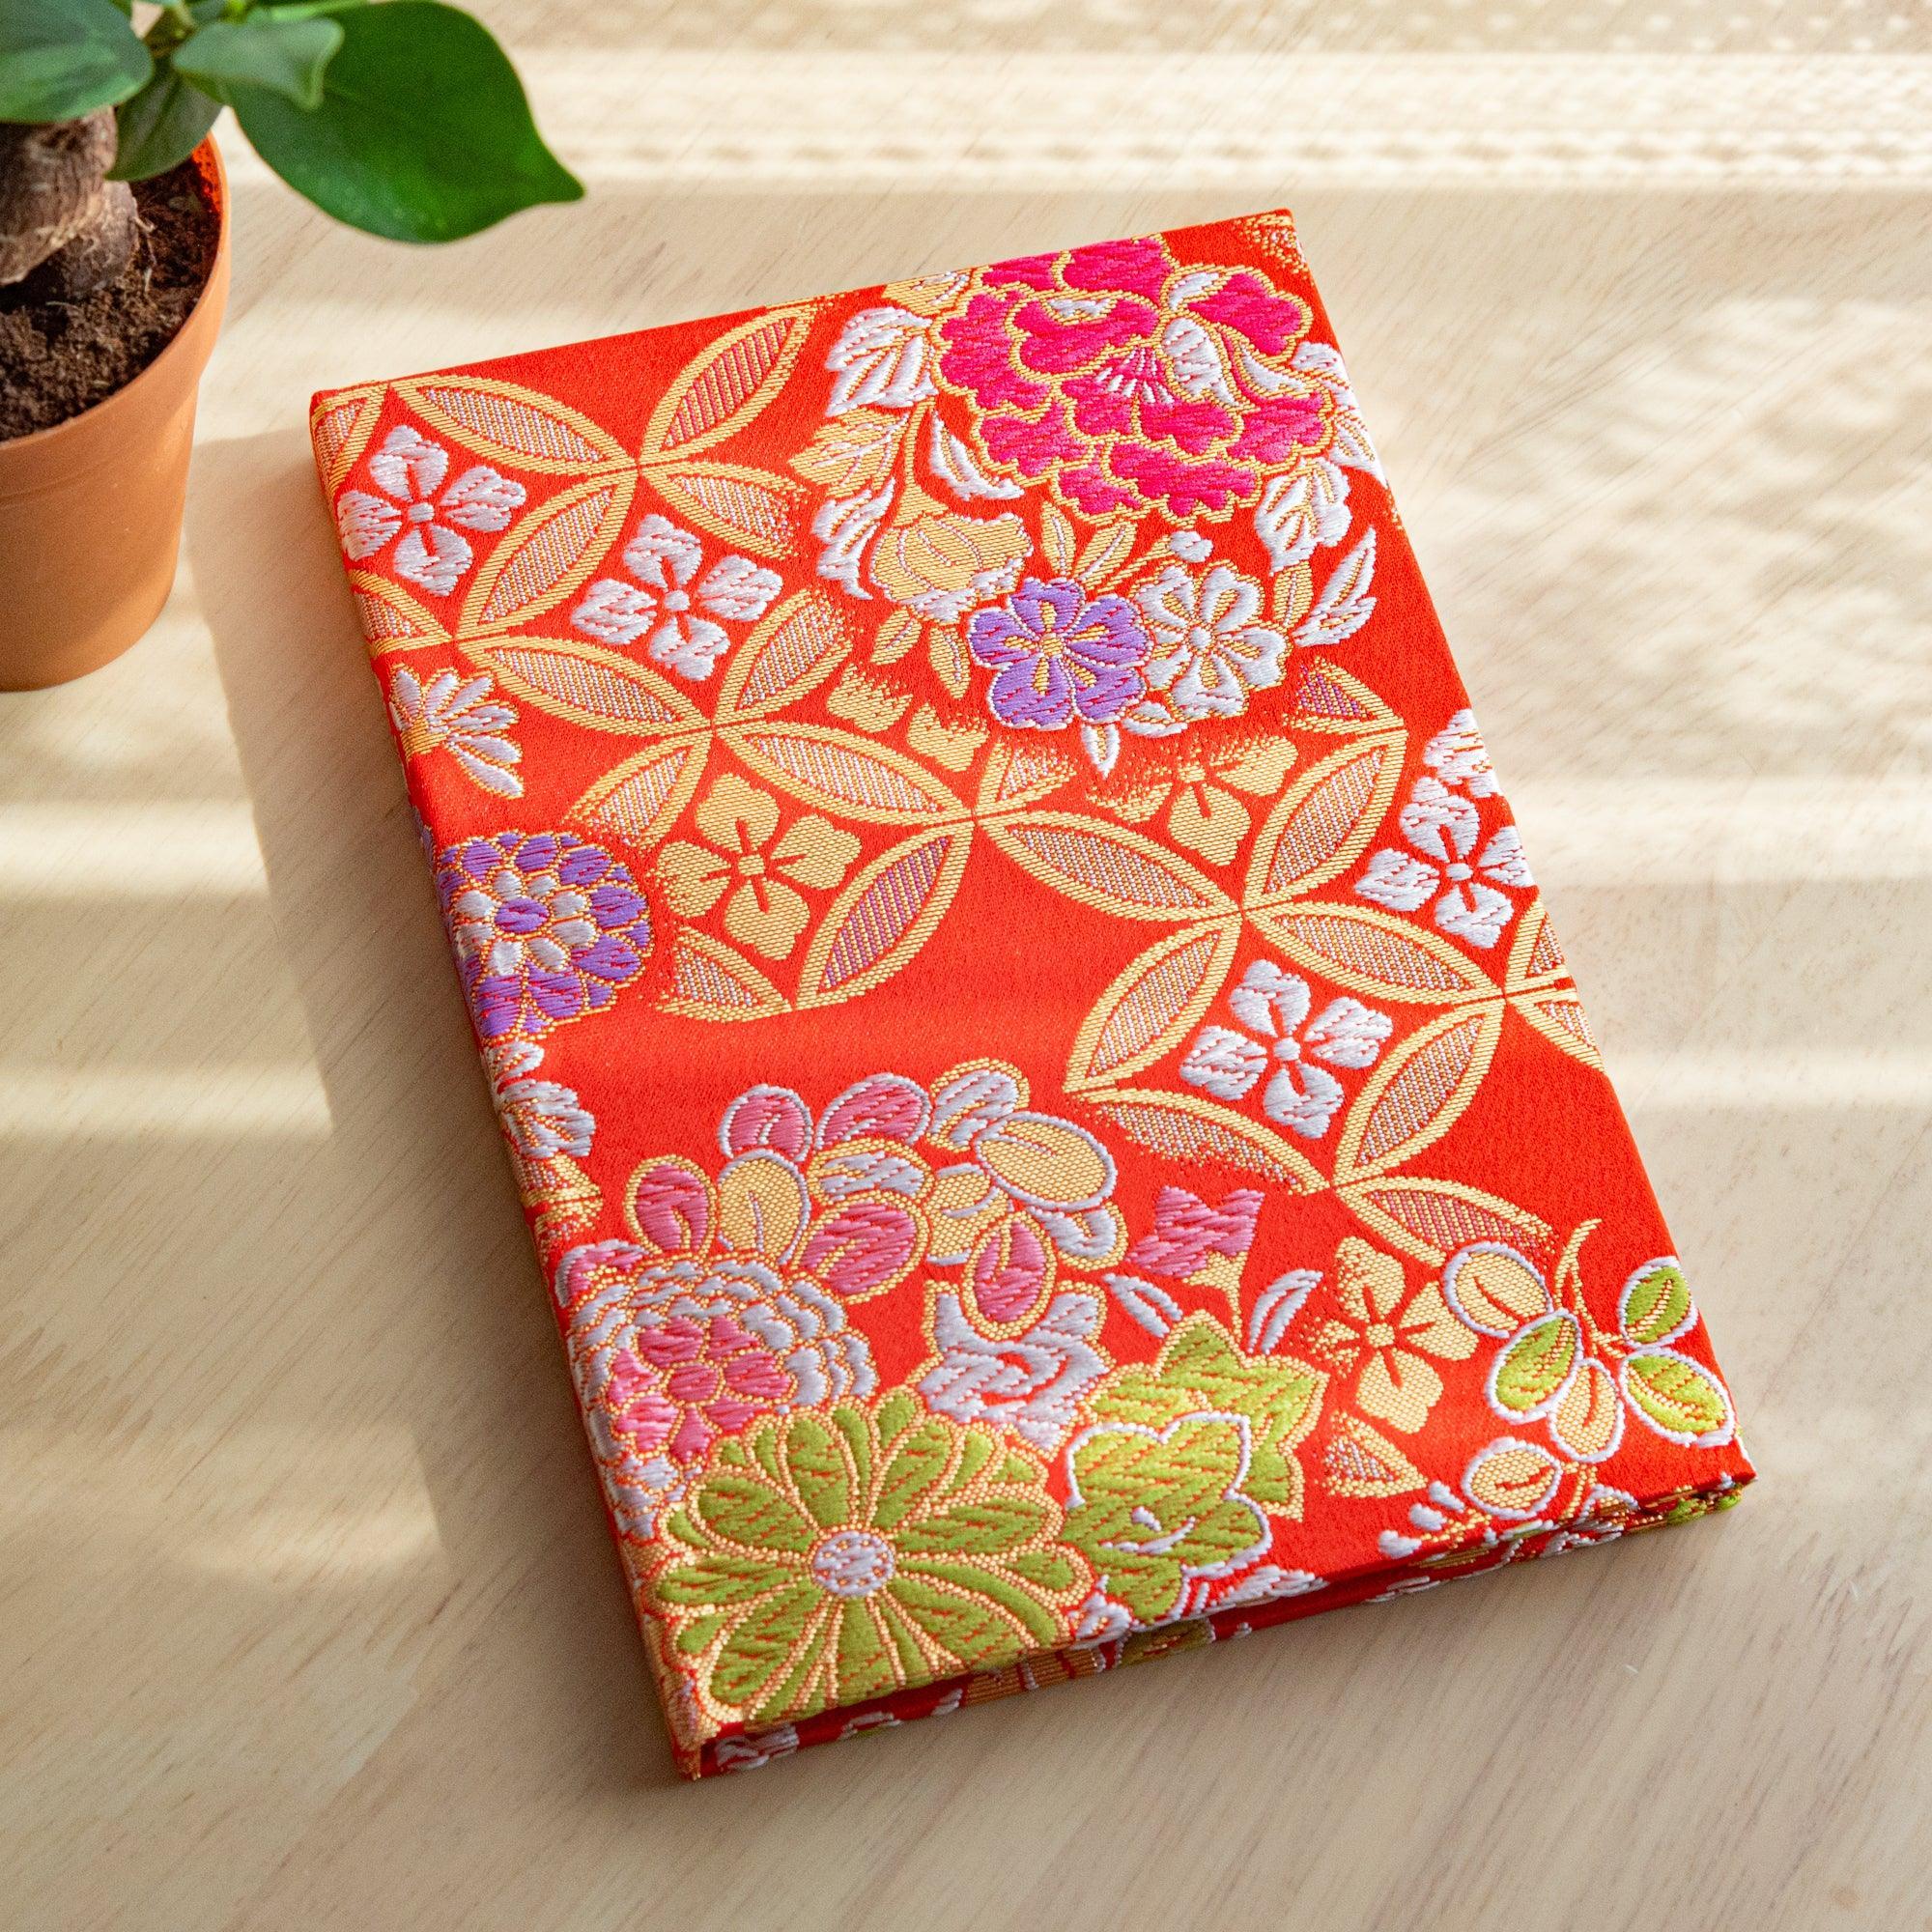 nishijin-textile-floral-shippo-pattern-notebook-or-b6-morisan-komorebi-stationery-1 - Komorebi Stationery